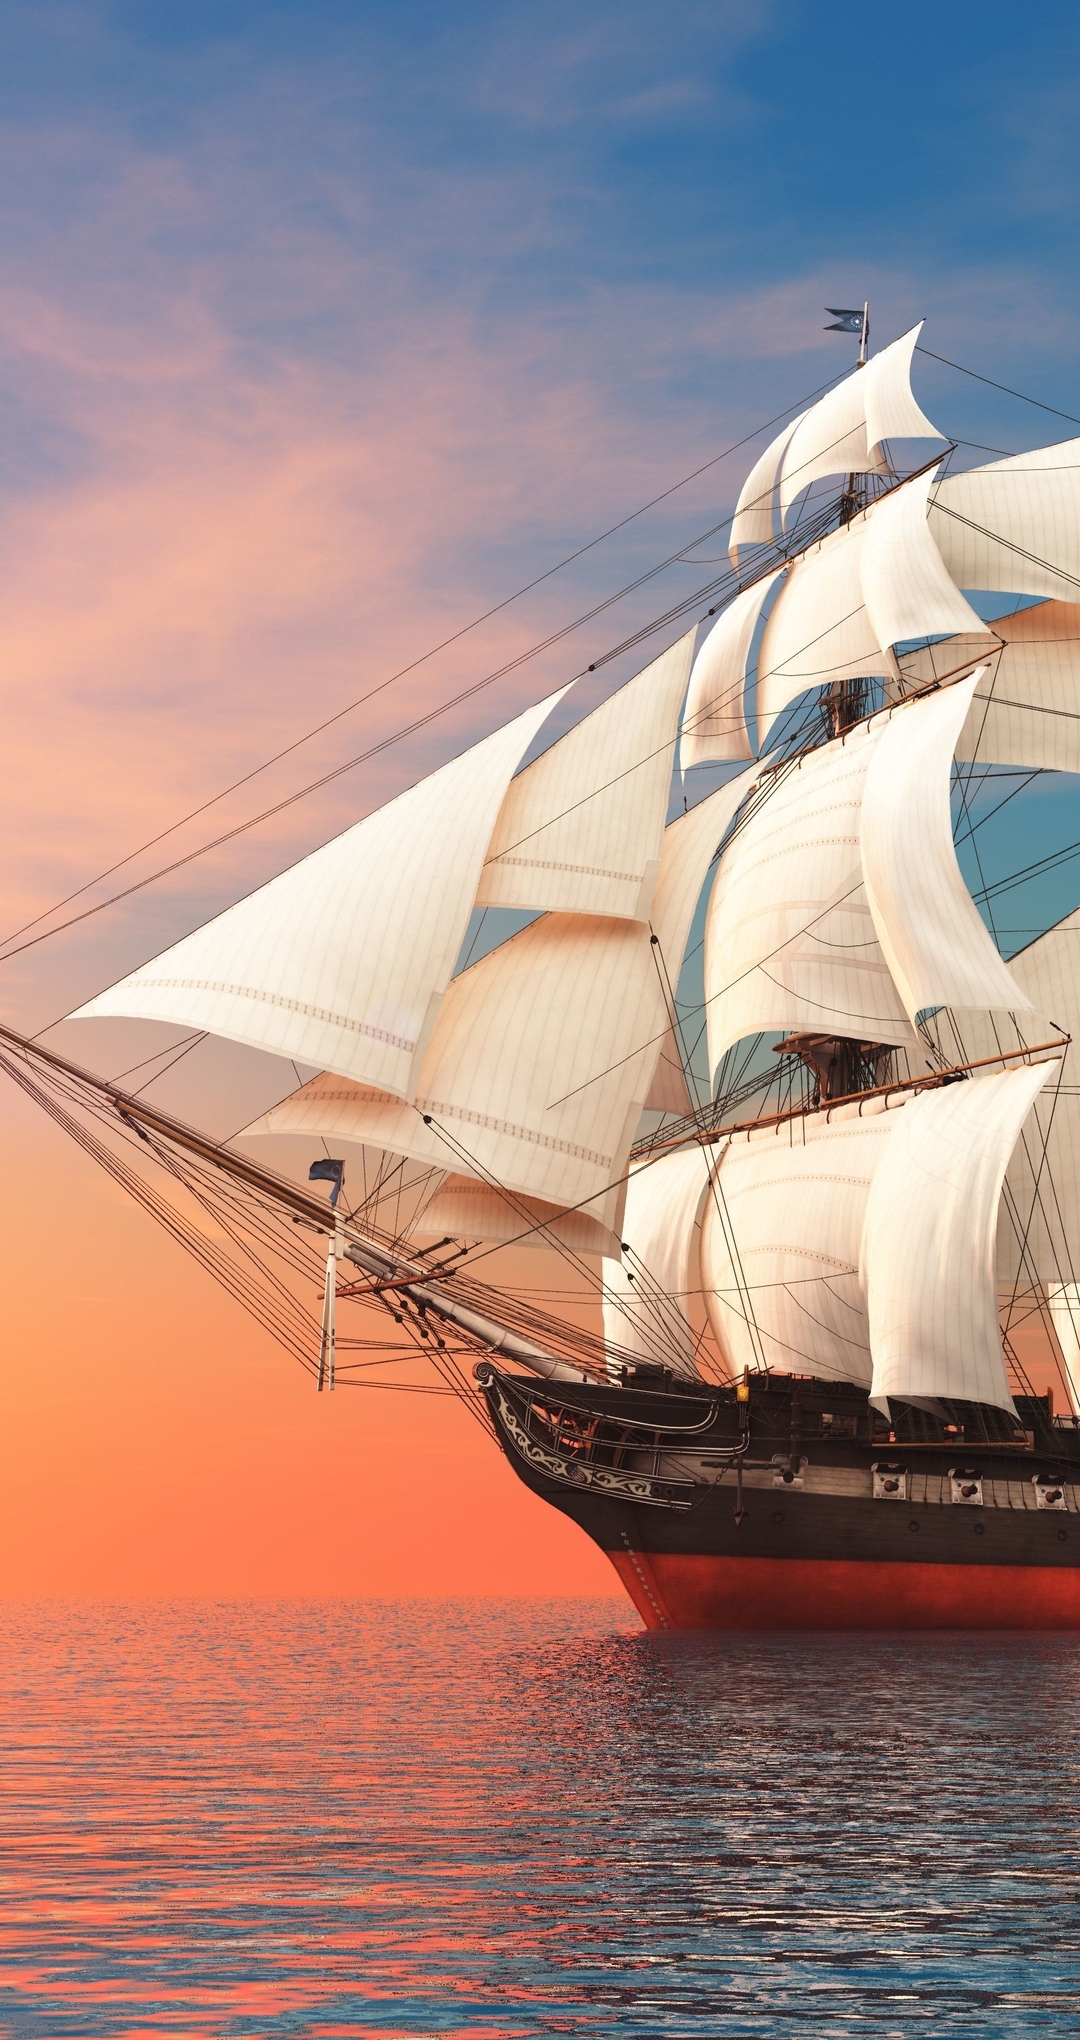 Image: Ship, sail, ocean, water, sky, sun